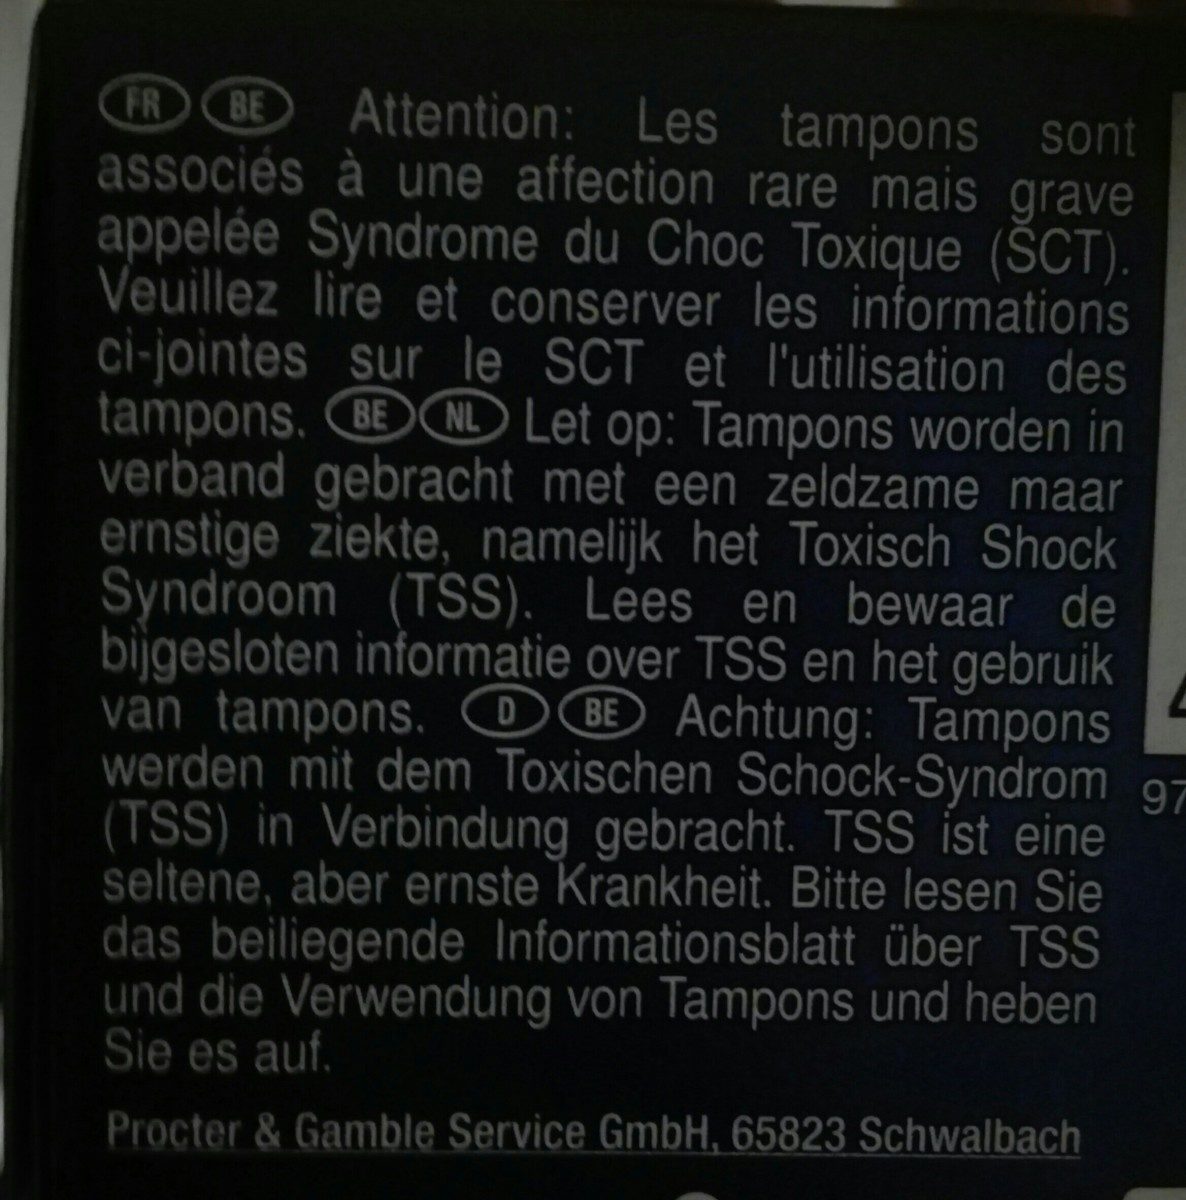 Tampax Compack De - Ingredientes - fr